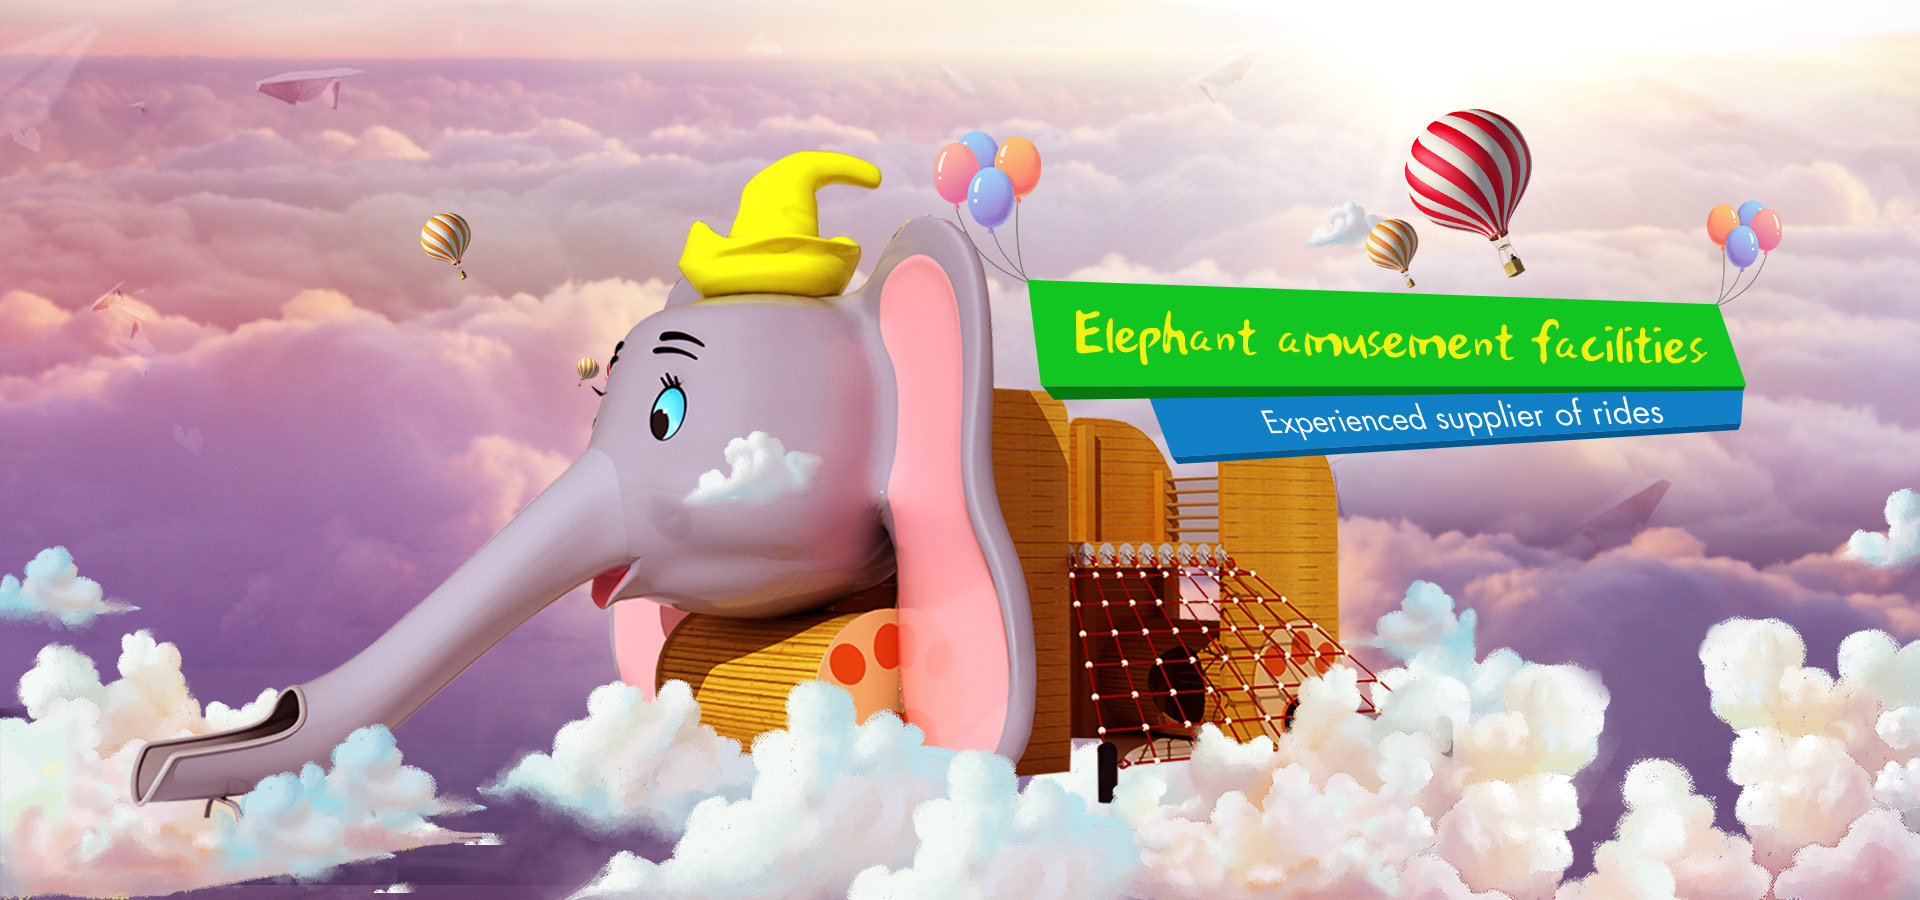 des installations de divertissement Elephant